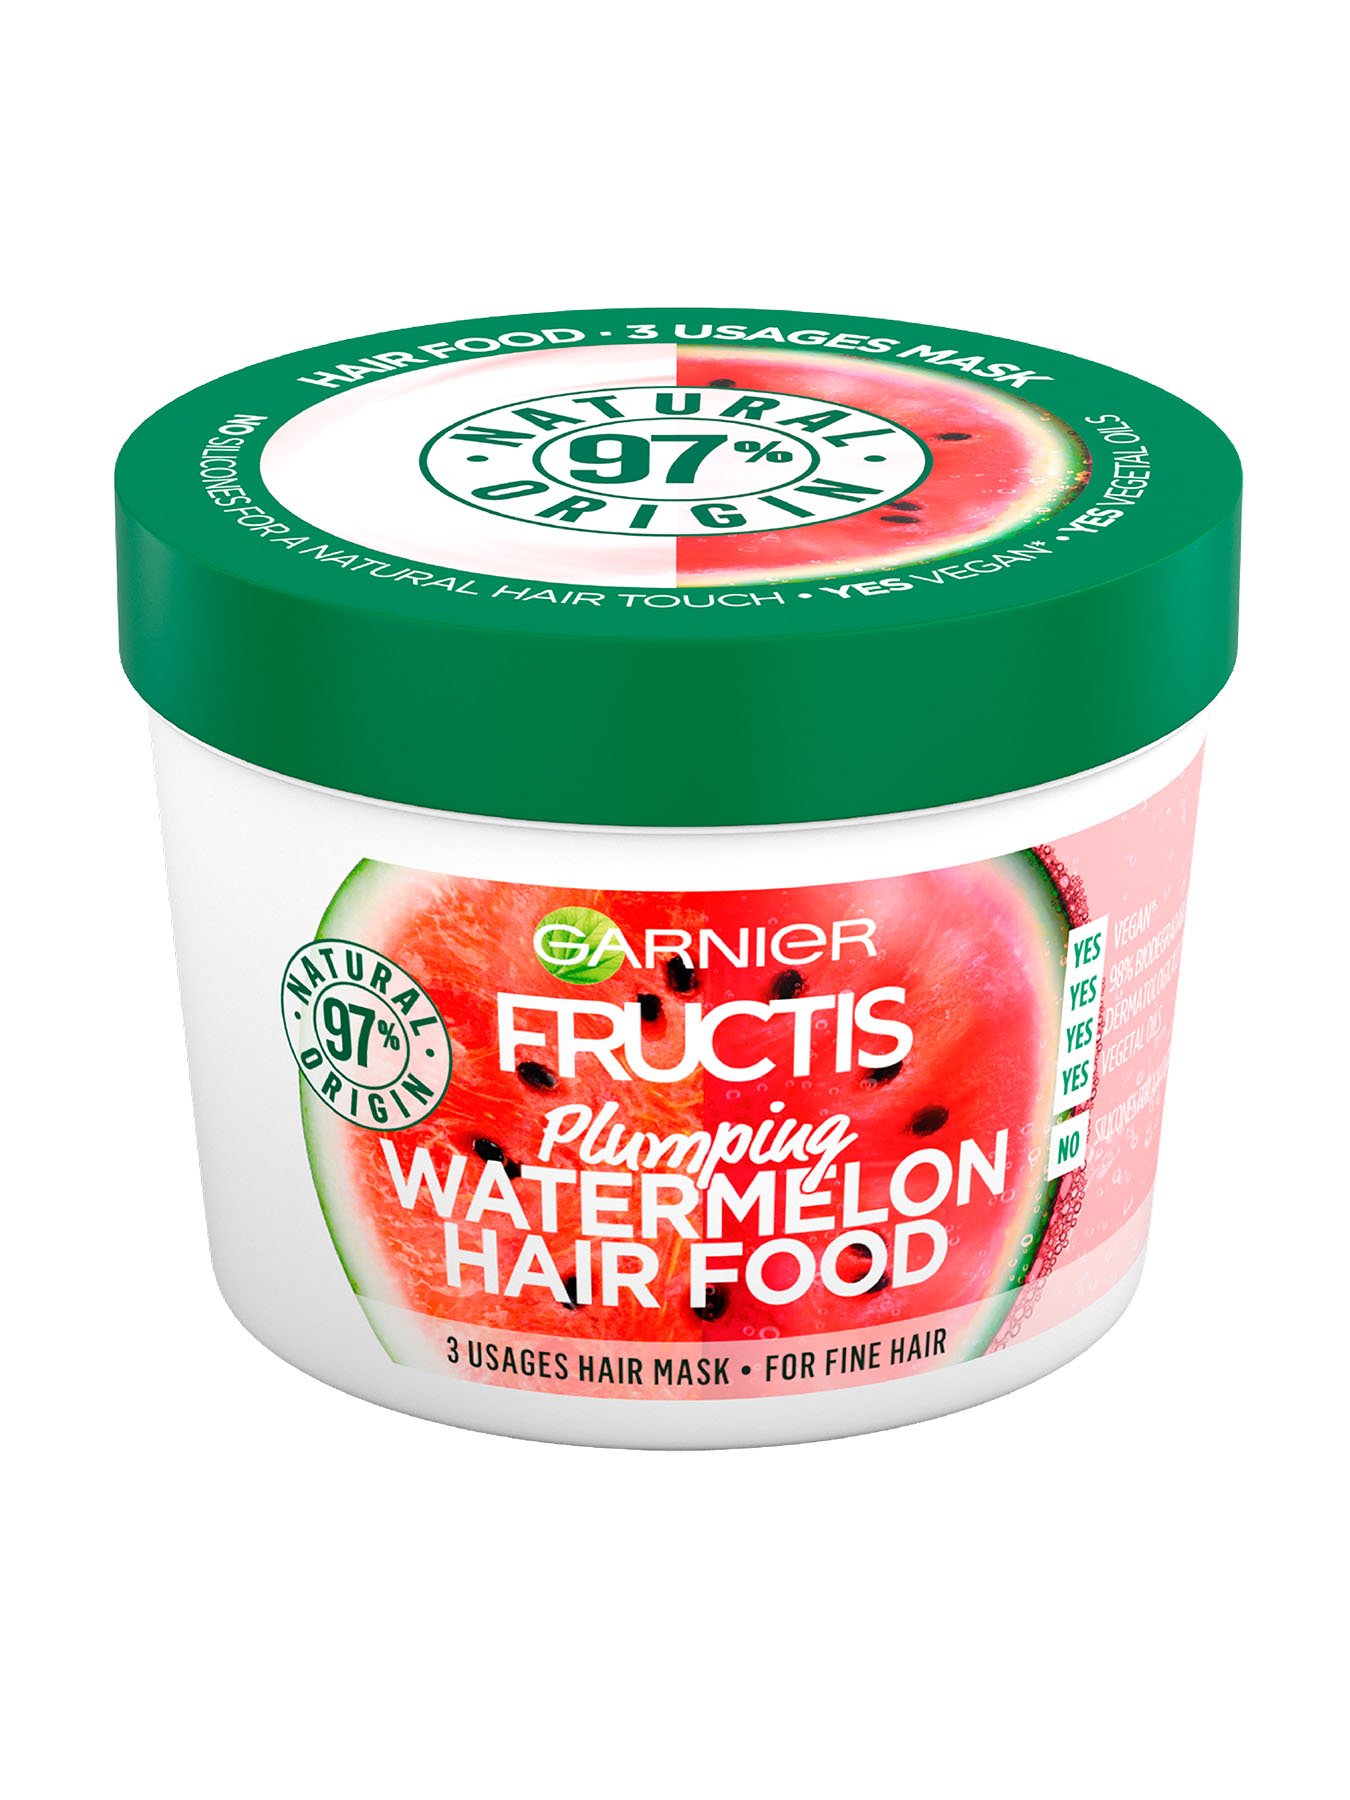 Garnier Fructis Hair Food Watermelon maska 